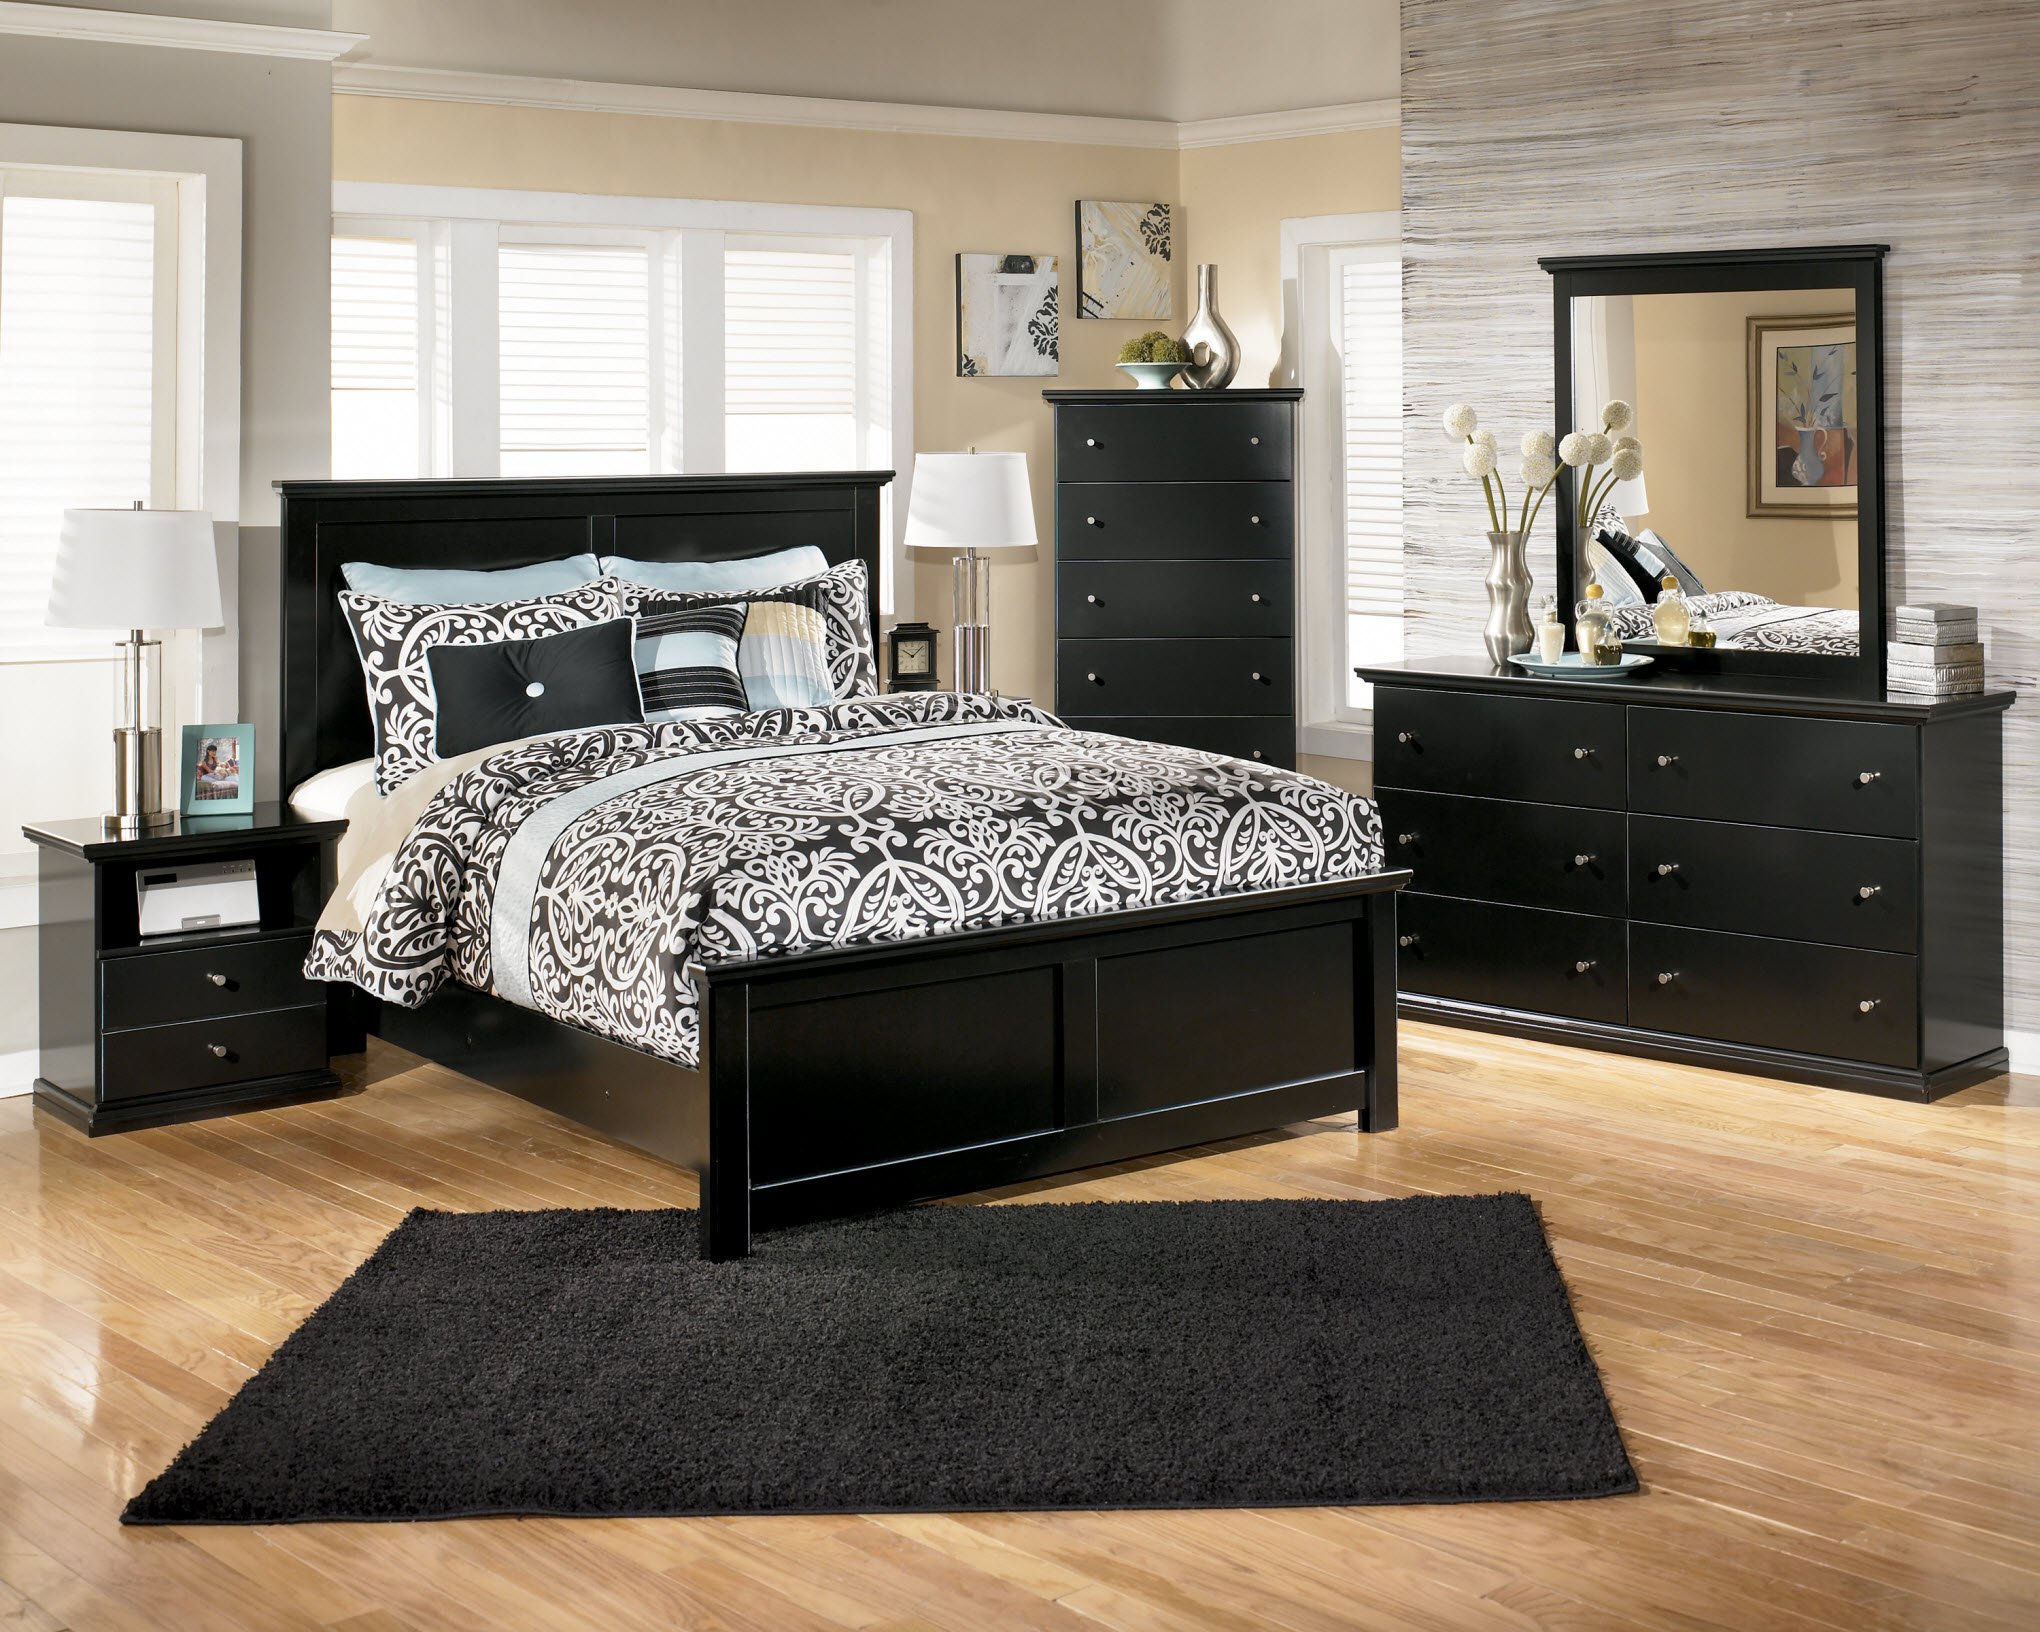 Dormitor cu mobilier negru din lemn si covor negru cu fir lung